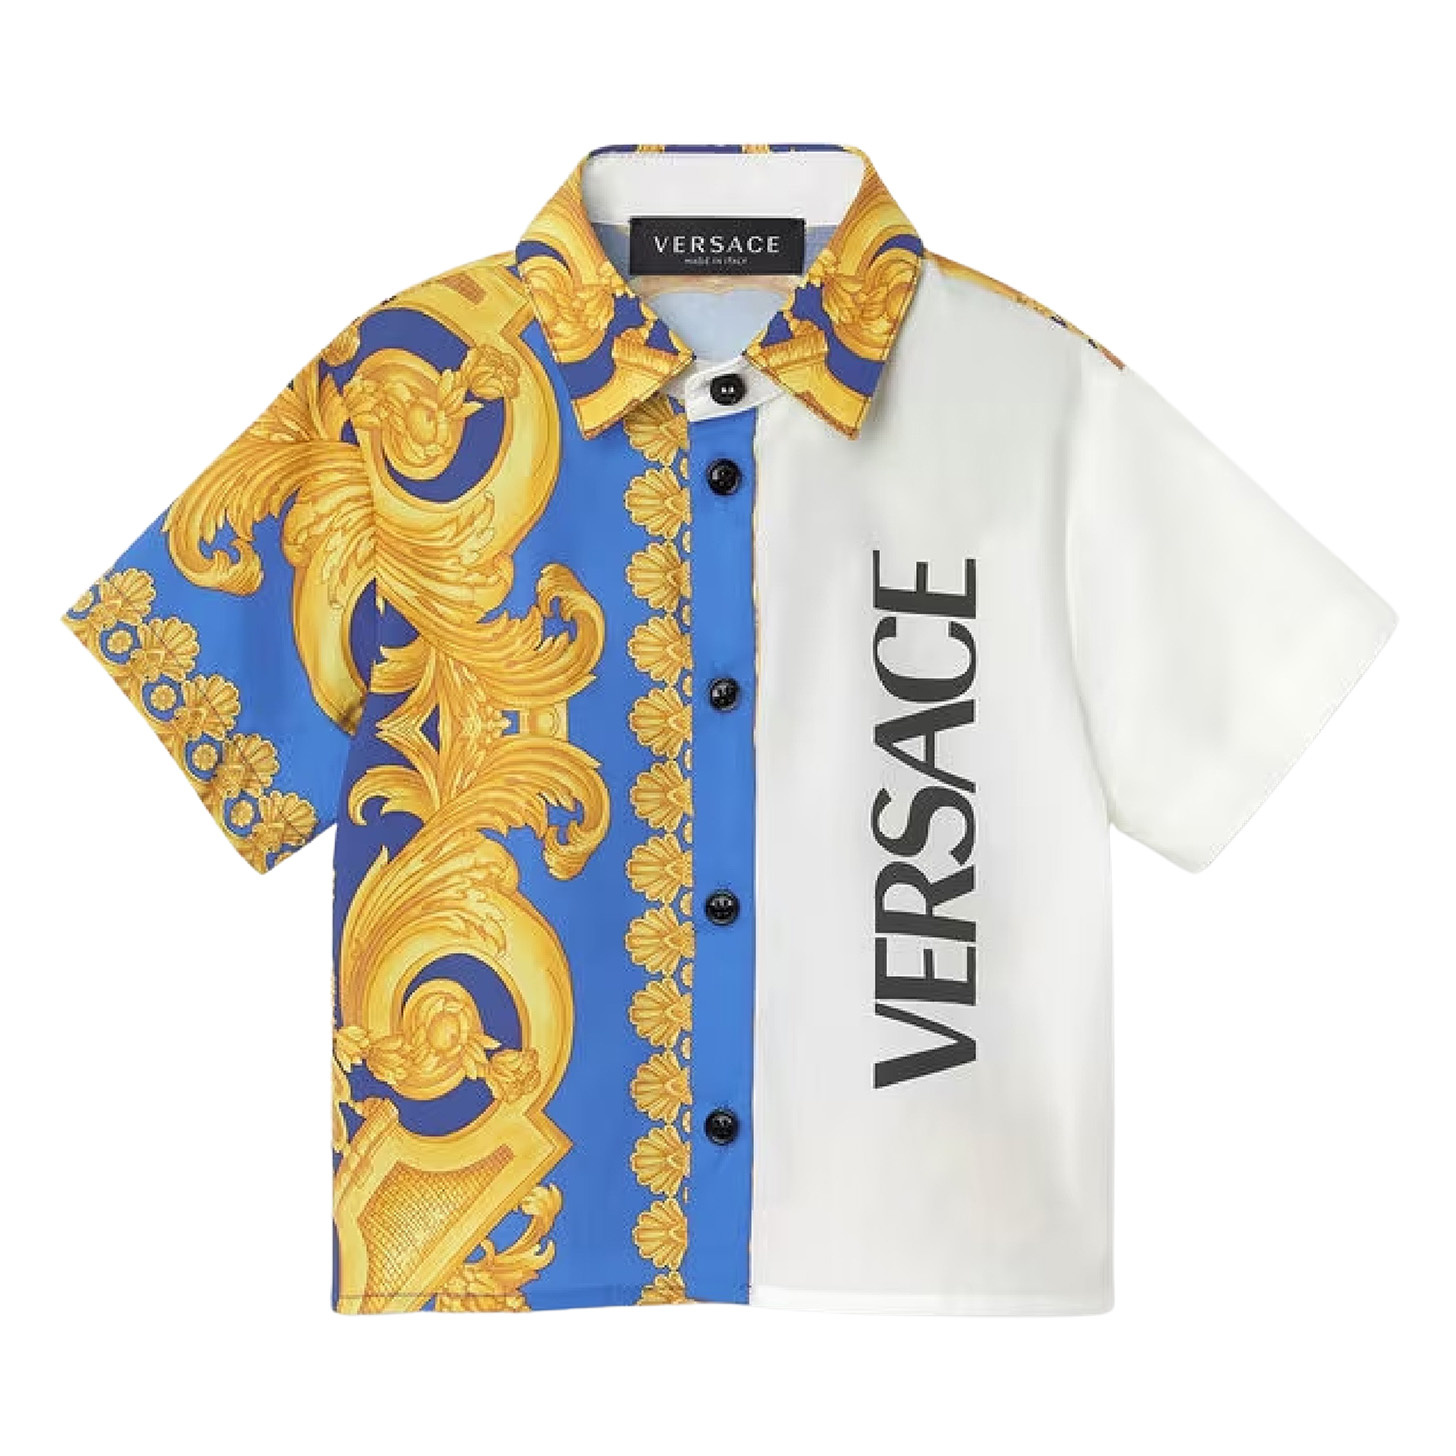 Symfonie Autonomie In de naam Versace Informal Shirt Poplin Baroque 660 Poplin Logo Print Irisgold White  Black - Lolly Pop Kindermode